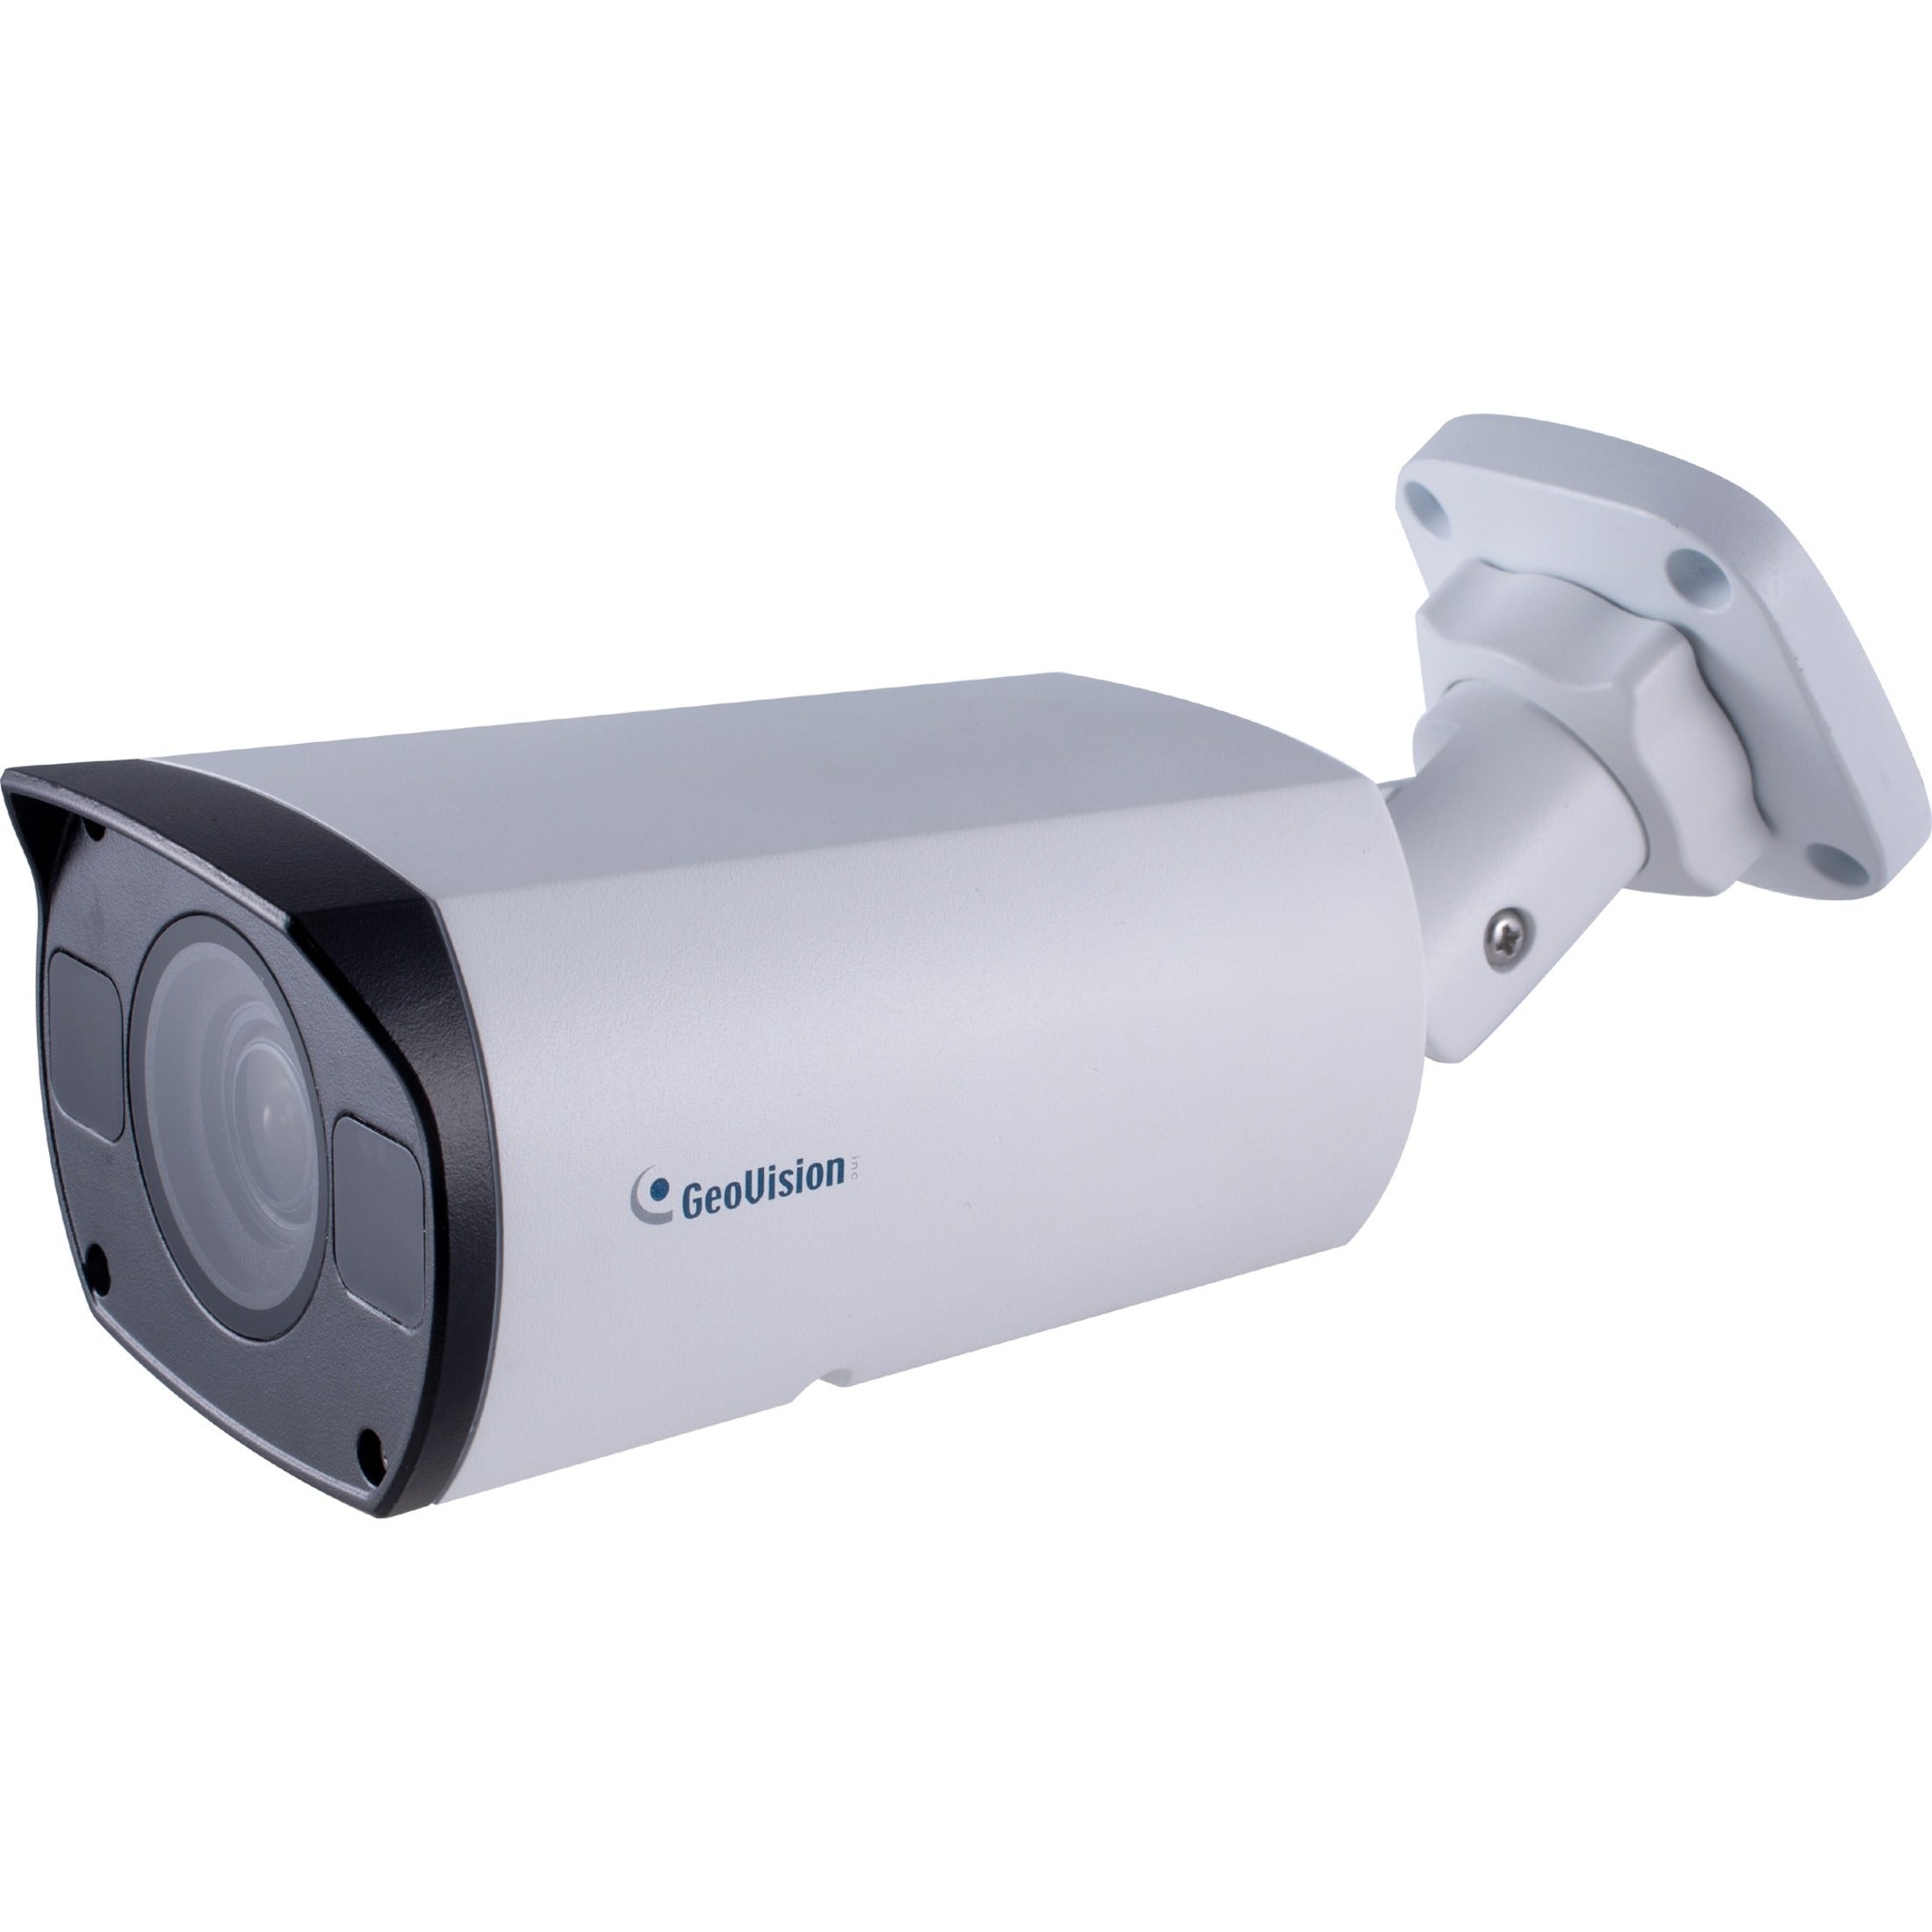 GeoVision GV-TBL4700 4MP H.265 Super Low Lux WDR IR Bullet IP Camera, Varifocal Lens, 20fps, 2592 x 1520, Outdoor